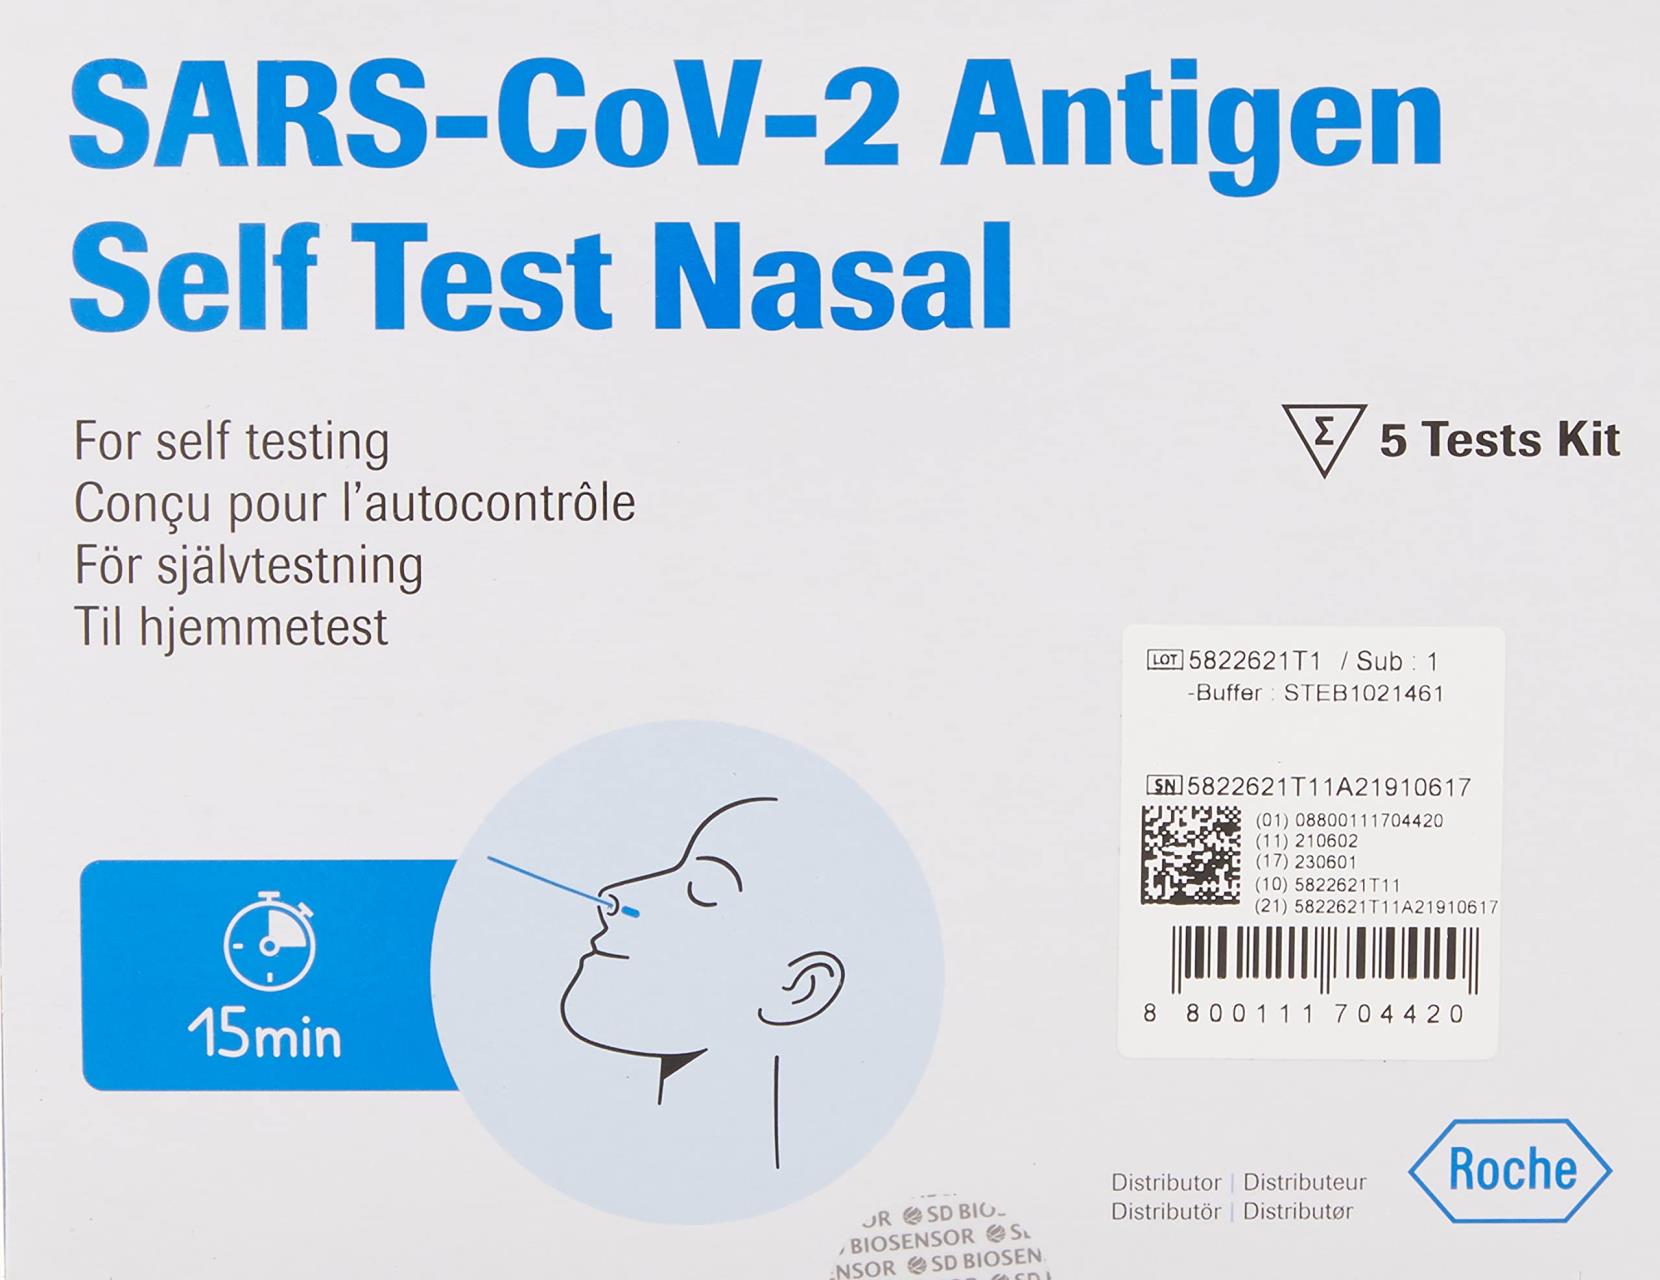 Free SARS-CoV-2 Antigen Self Tests